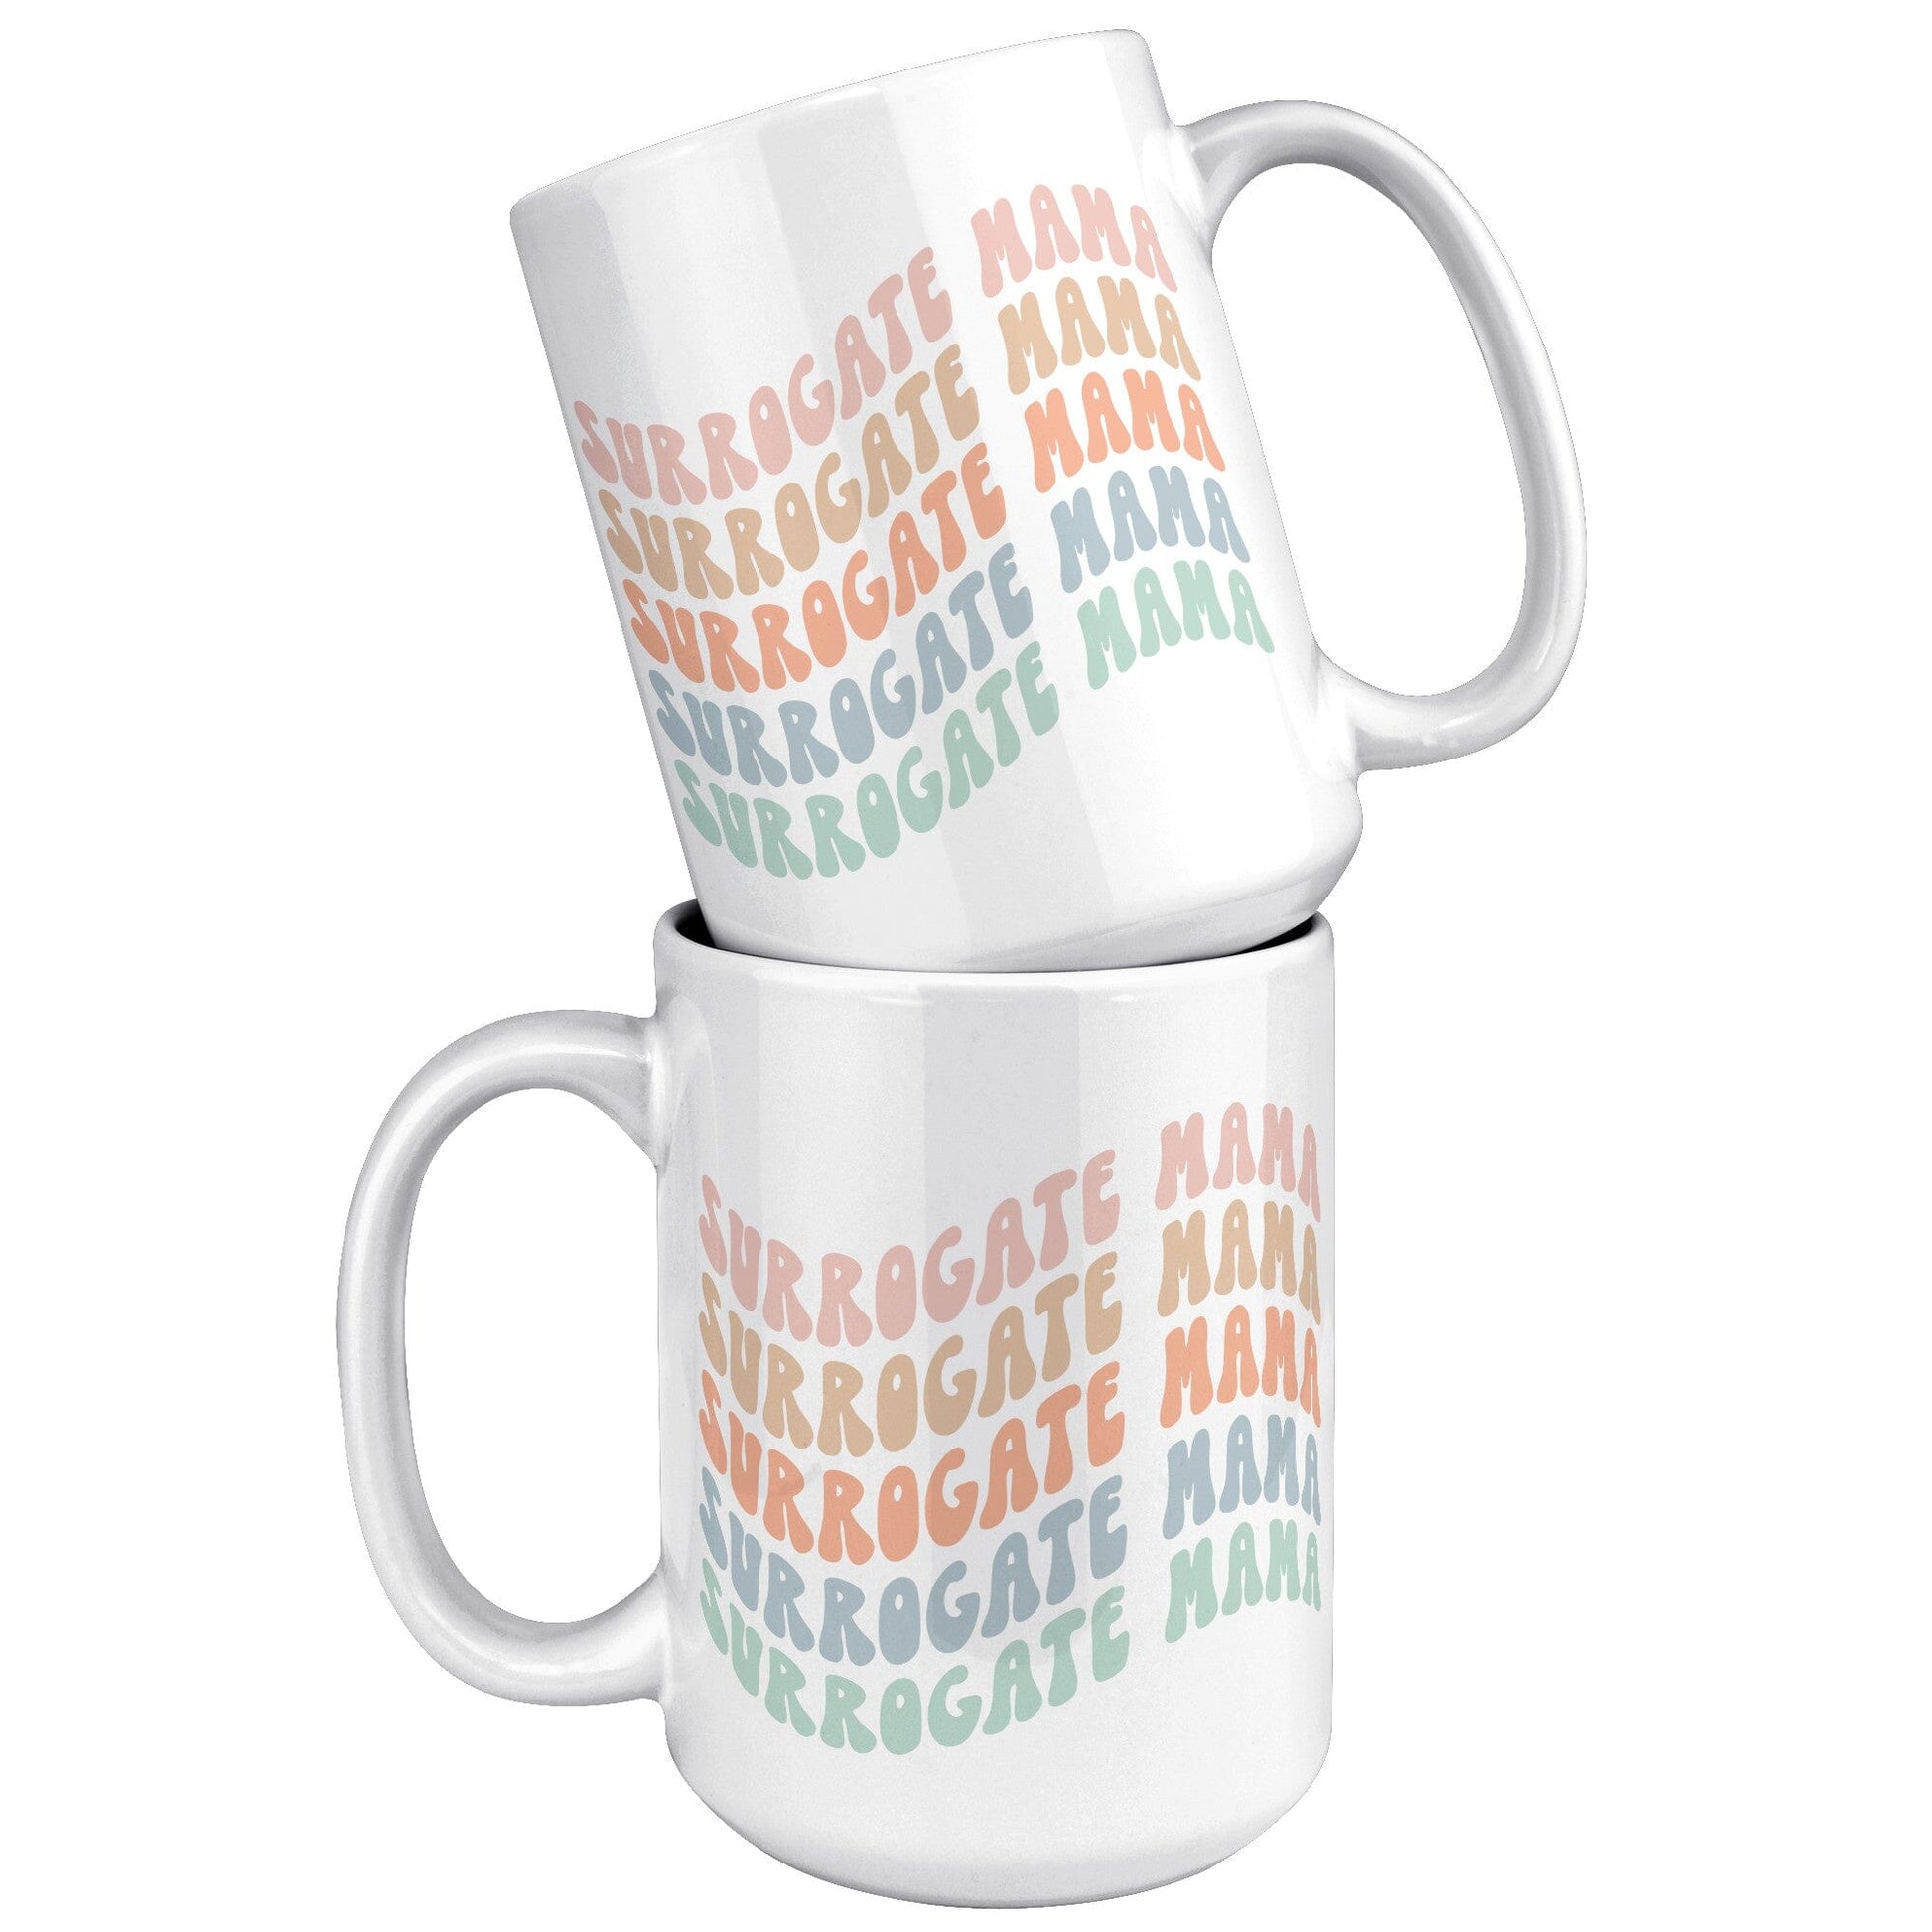 Surrogate Mama Gifts | IVF Gift | Retro Vintage Vibe | Tea Mug | Gifts for Transfer Day Coffee Mugs teelaunch 